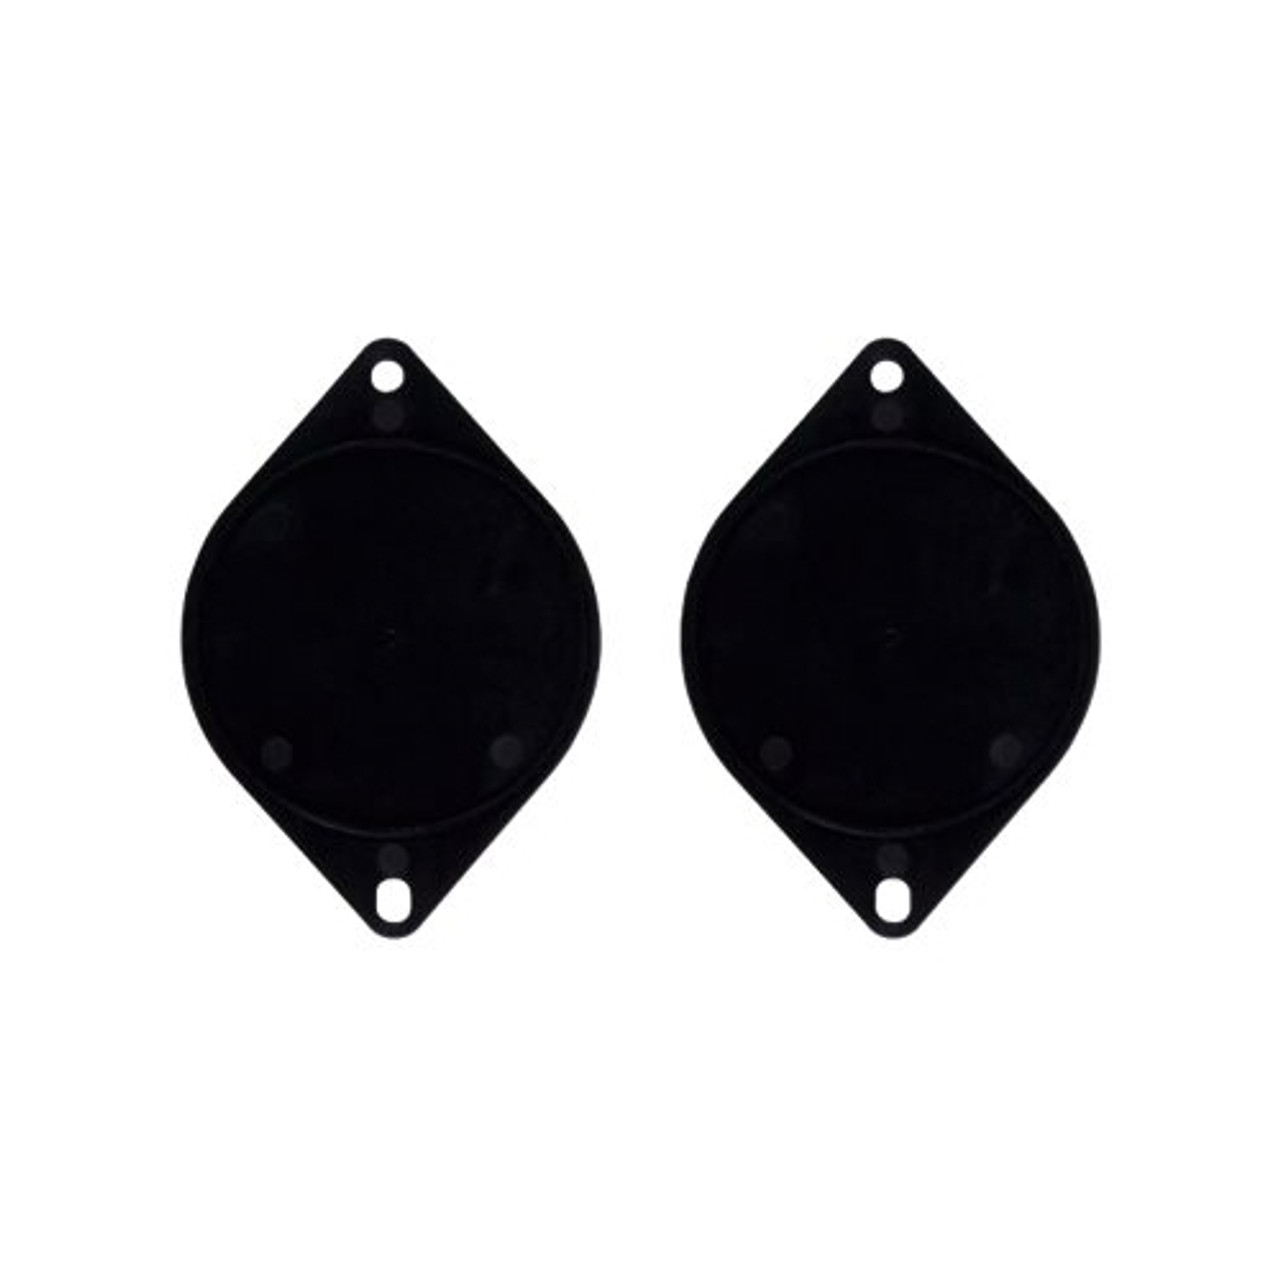 Metra - Speaker Adapters for Select Vehicles (2-Pack) - Black